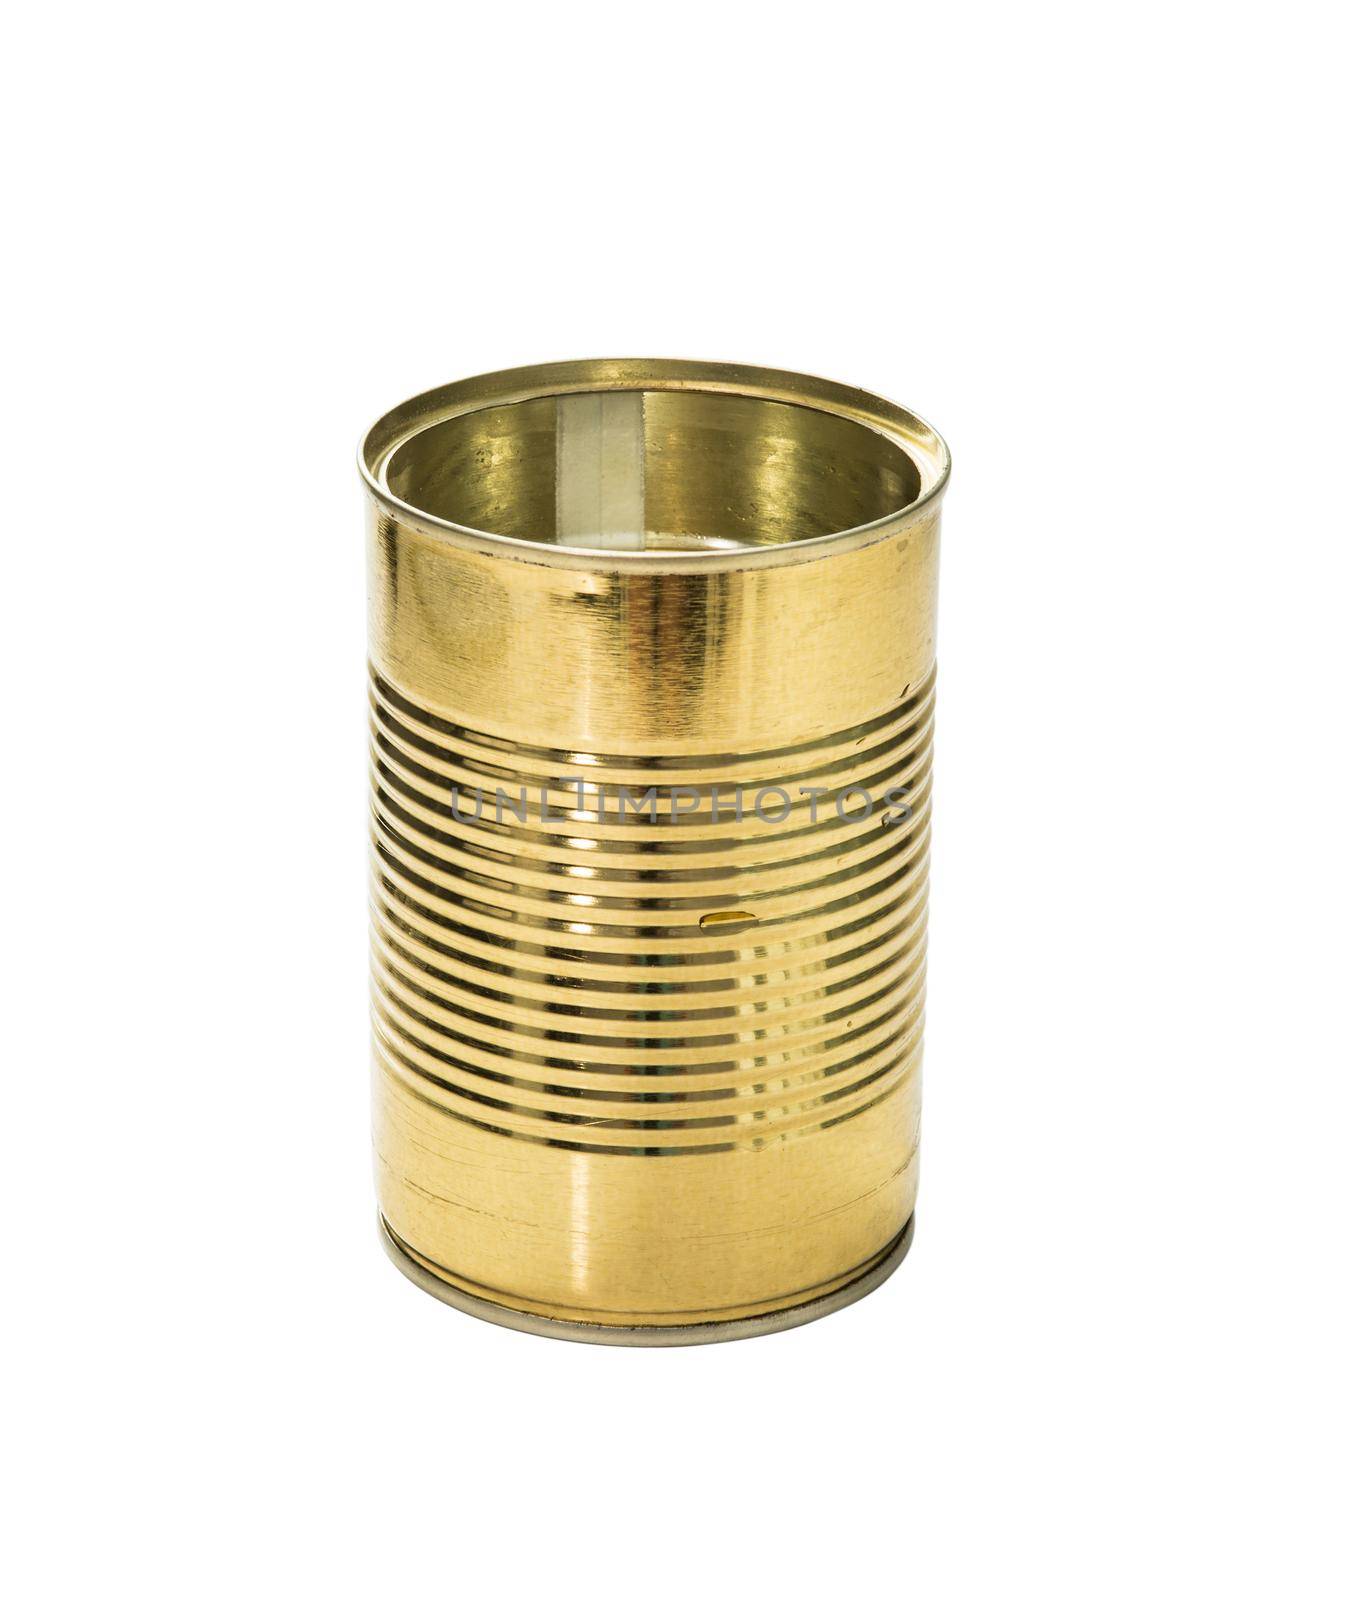 golden empty jar isolated on white background